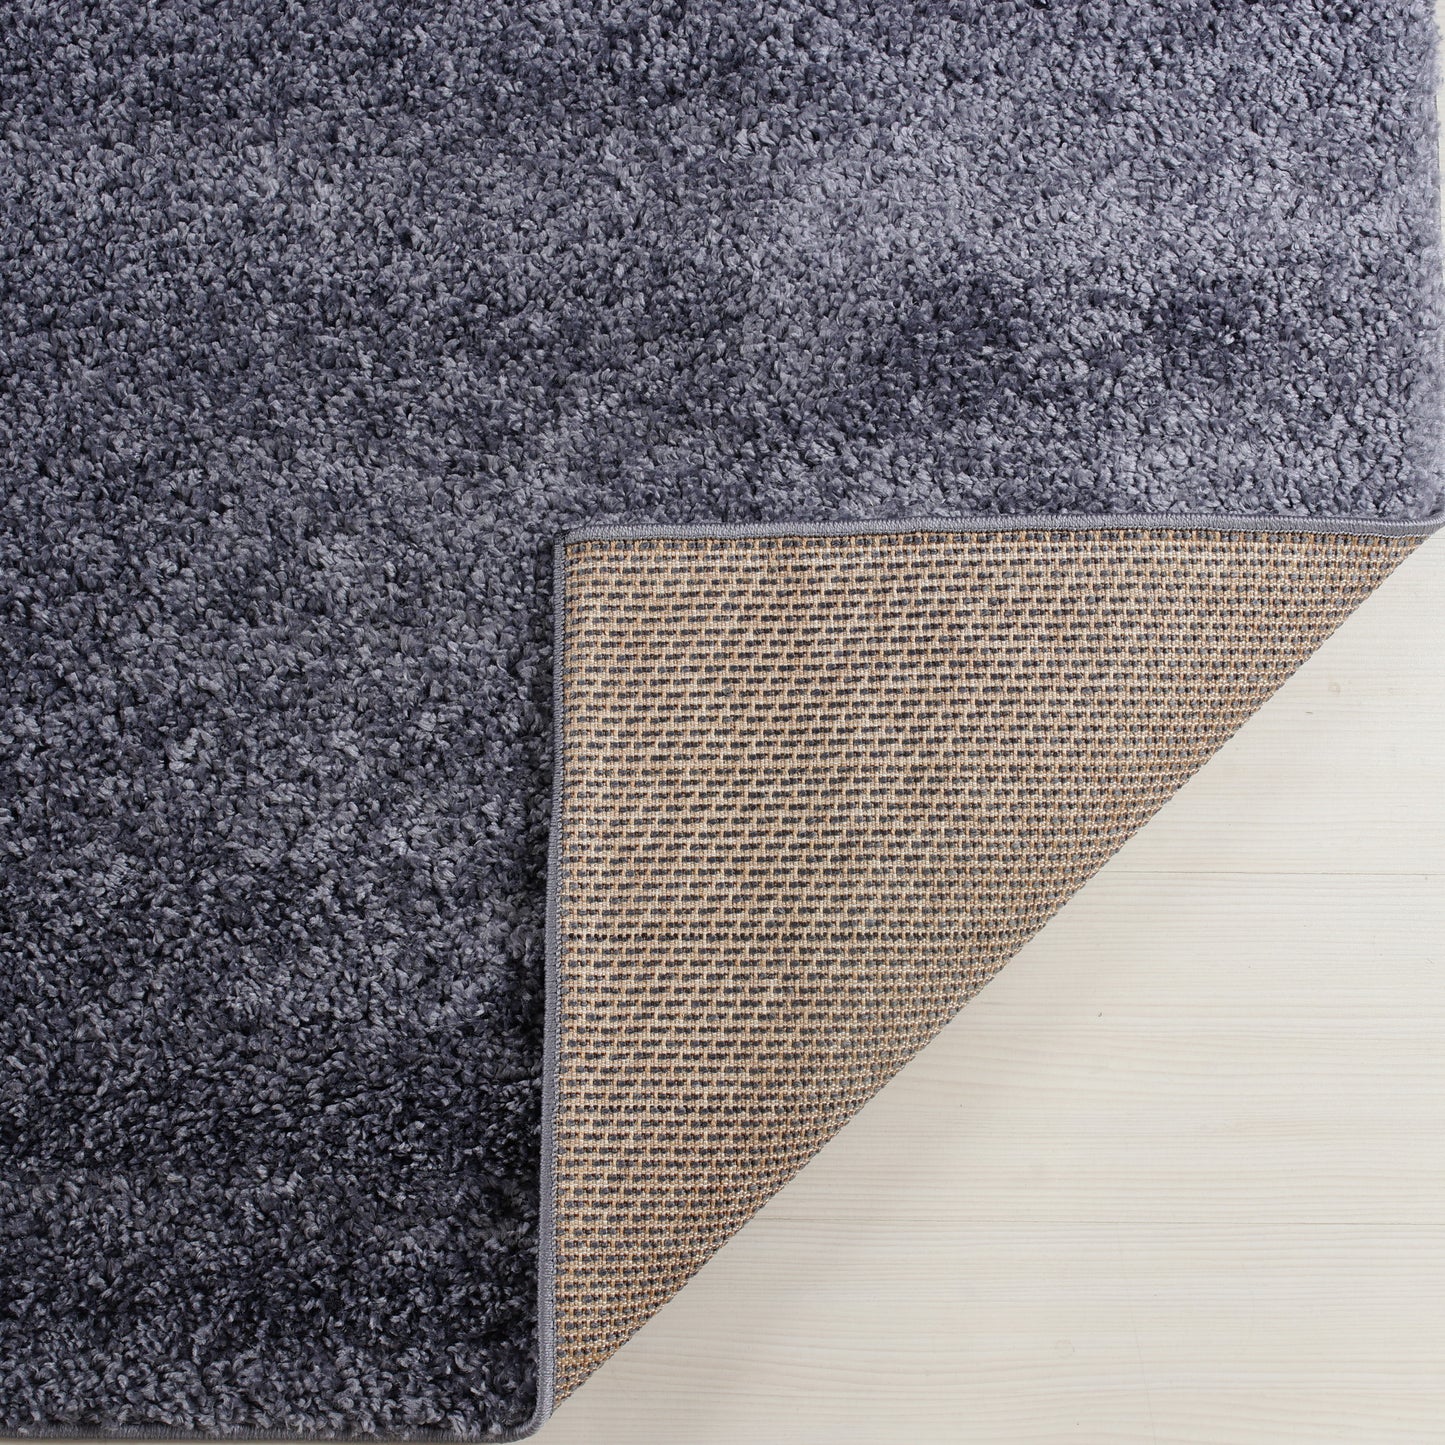 ladole rugs solid color shaggy meknes durable beautiful turkish indoor small mat doormat rug in gray 110 x 211 57cm x 90cm 8x10, 8x11 ft Large Living Room Carpet, Bedroom, Kitchen